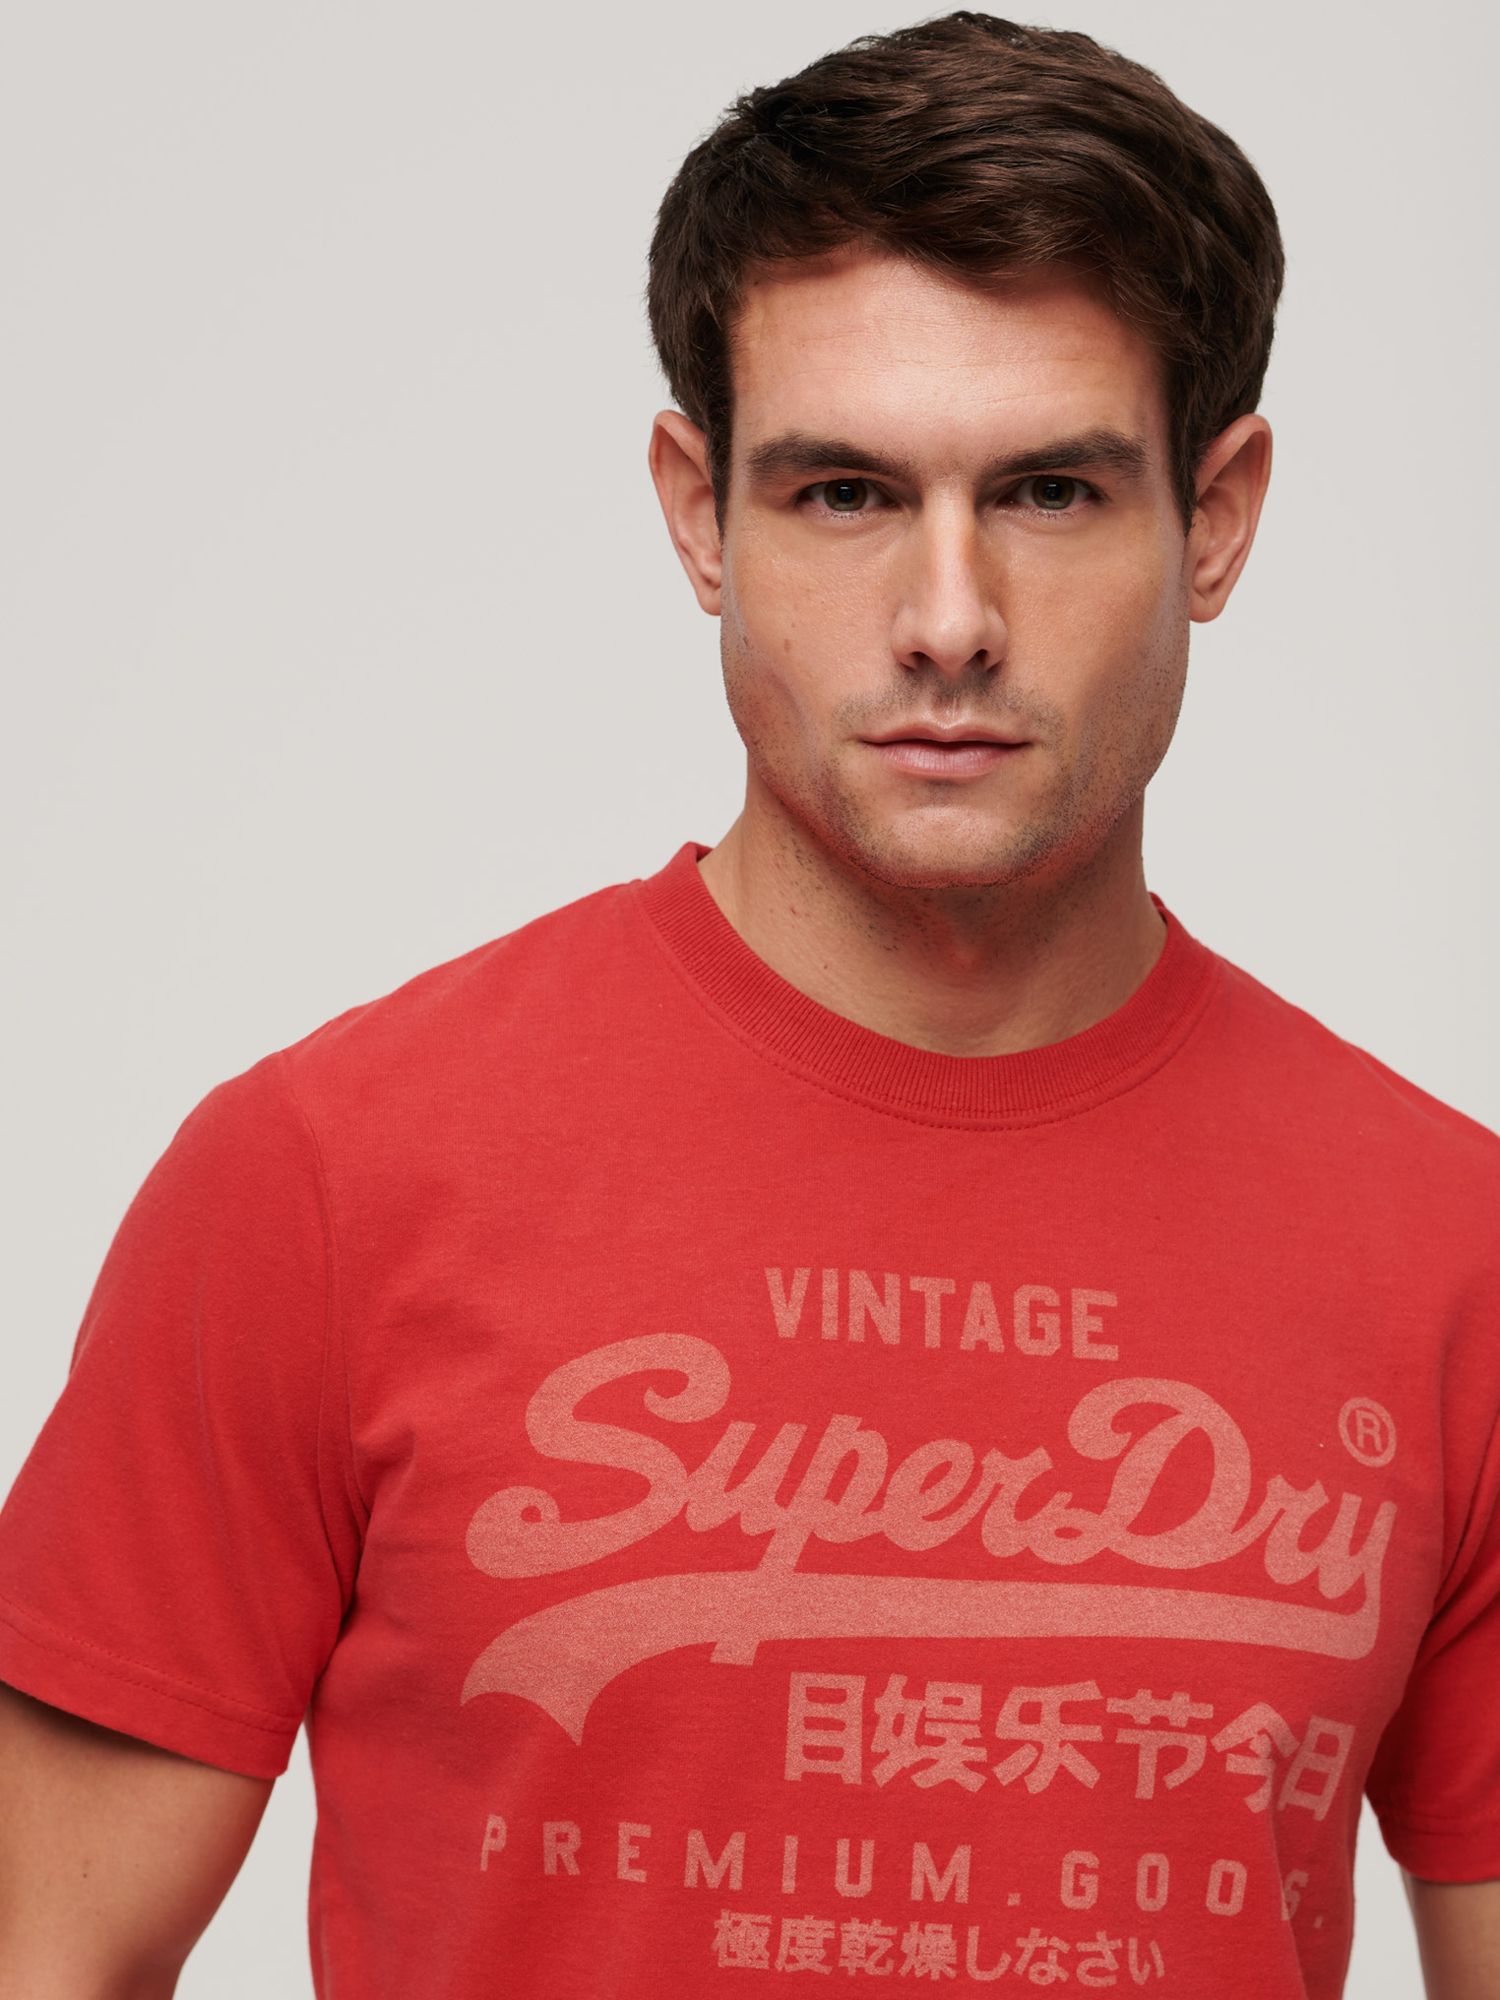 Buy Superdry Classic Heritage Logo T-Shirt, Ferra Red Marl Online at johnlewis.com